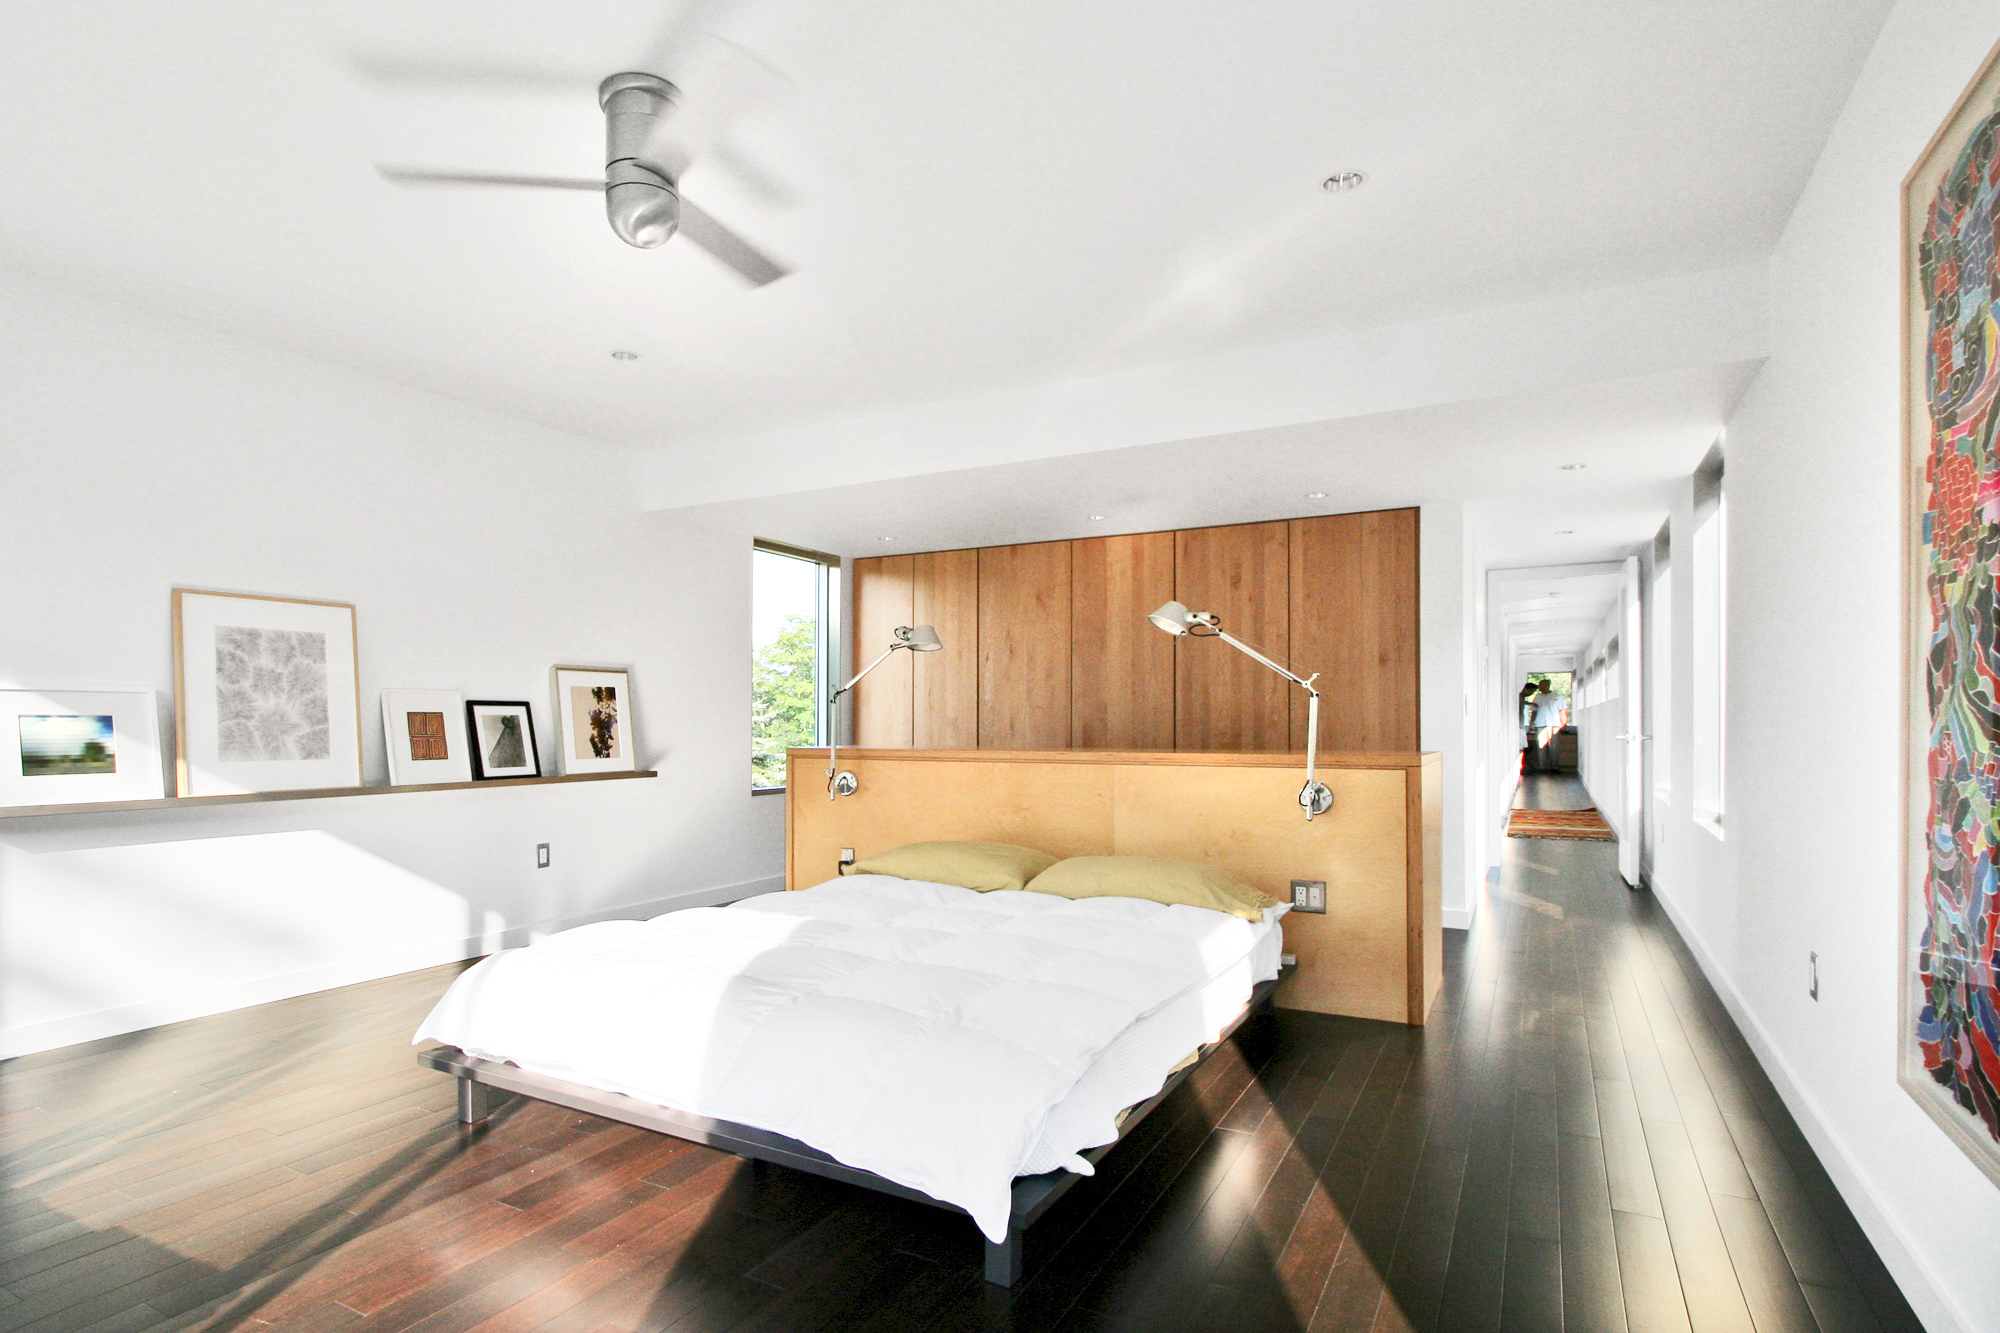 12-res4-resolution-4-architecture-modern-modular-home-prefab-sunset-ridge-house-interior-master-bedroom.jpg